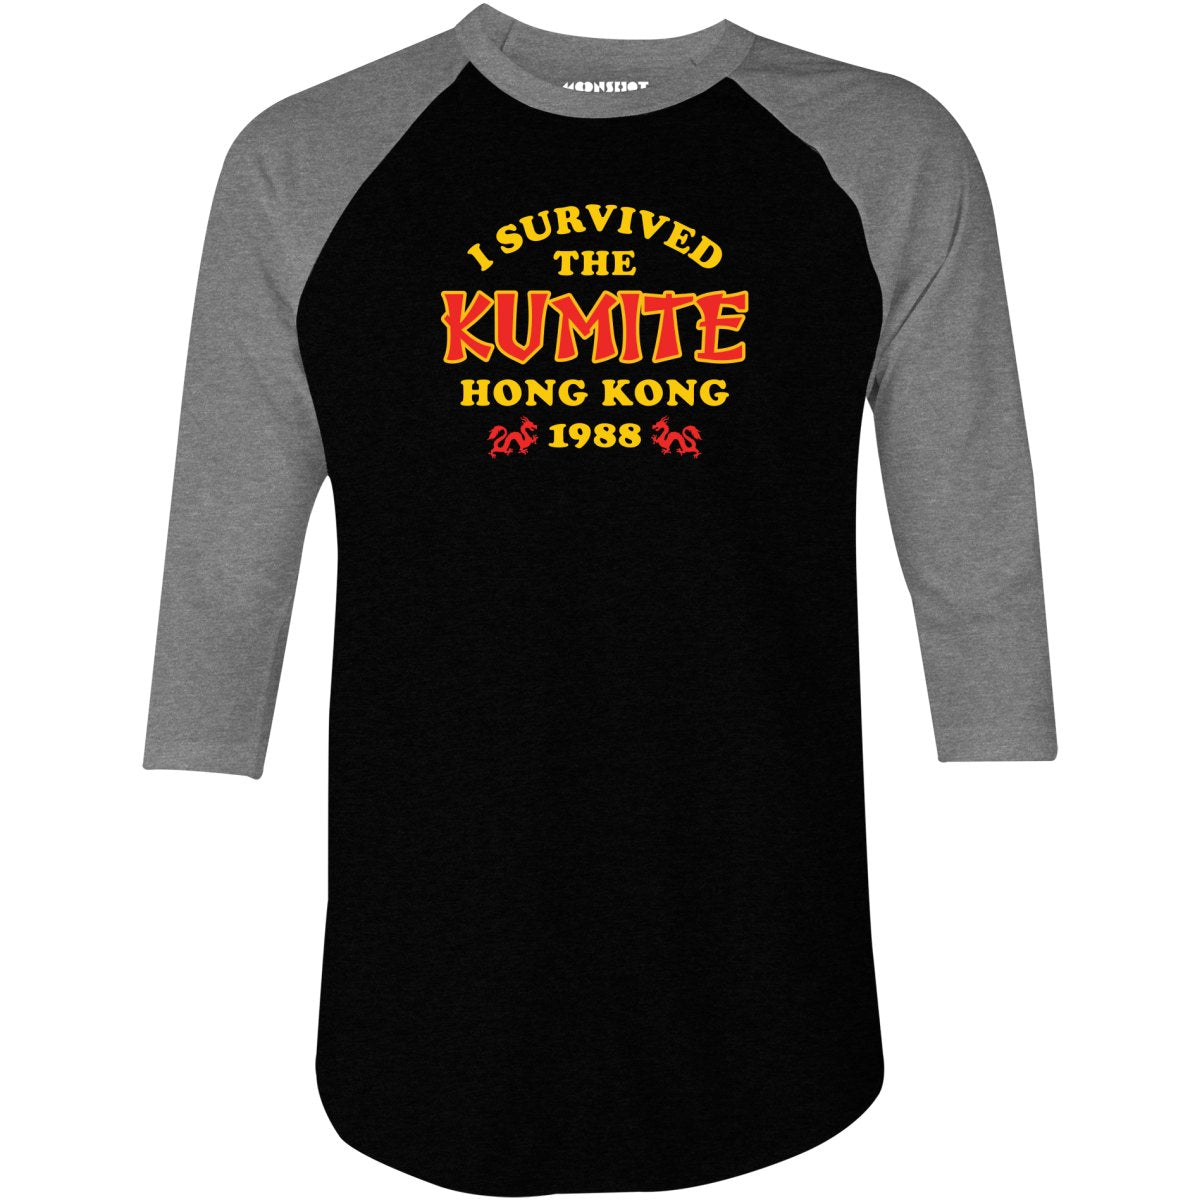 I Survived The Kumite 1988 - 3/4 Sleeve Raglan T-Shirt